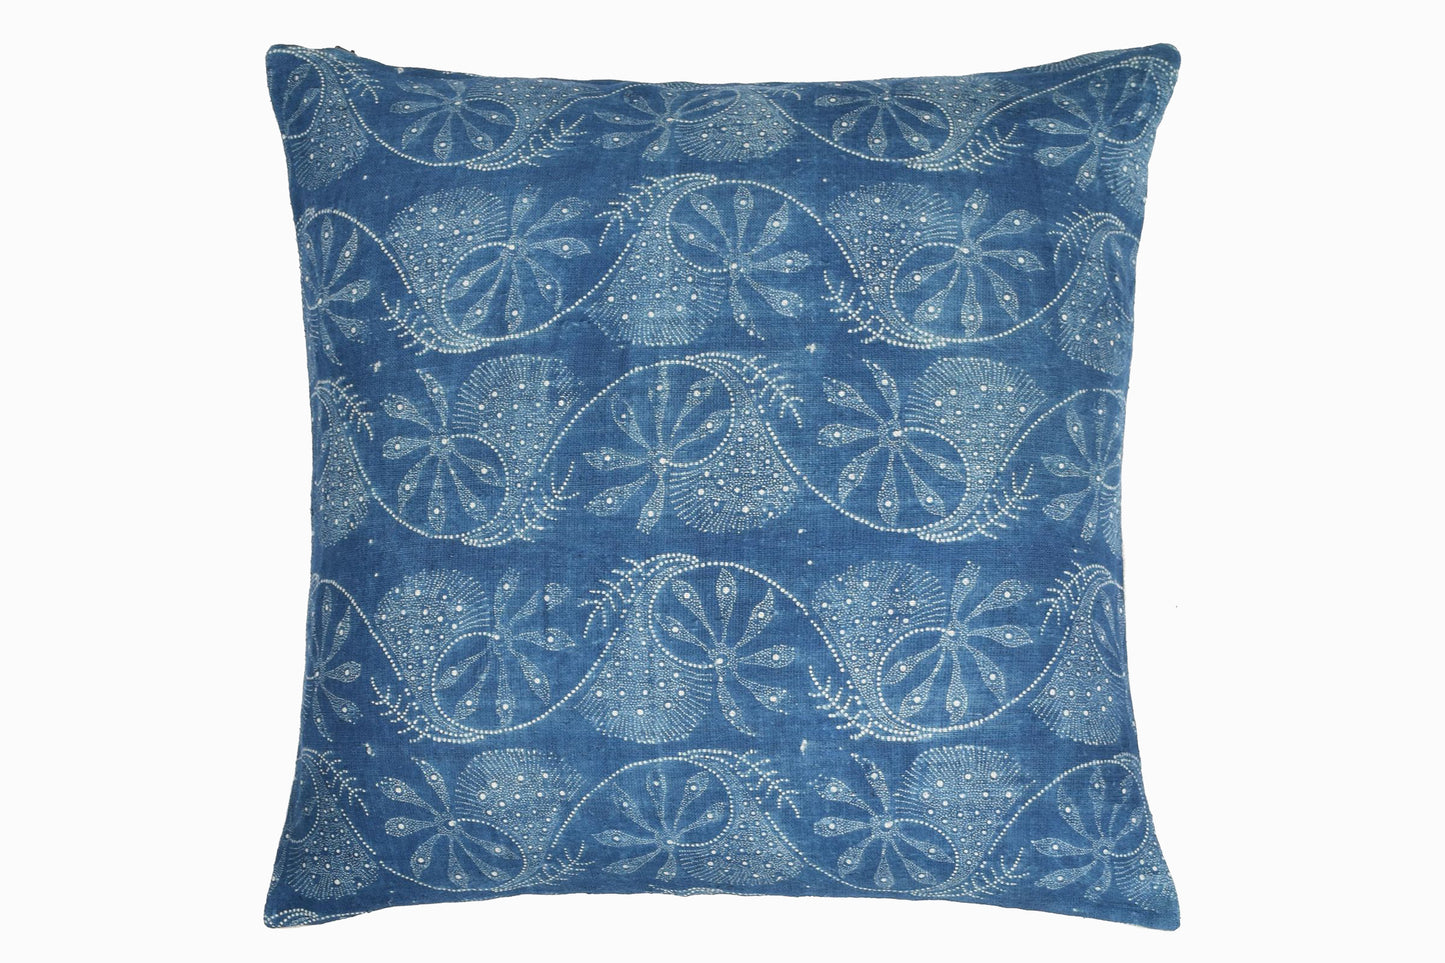 Hungarian Indigo fabric cushion